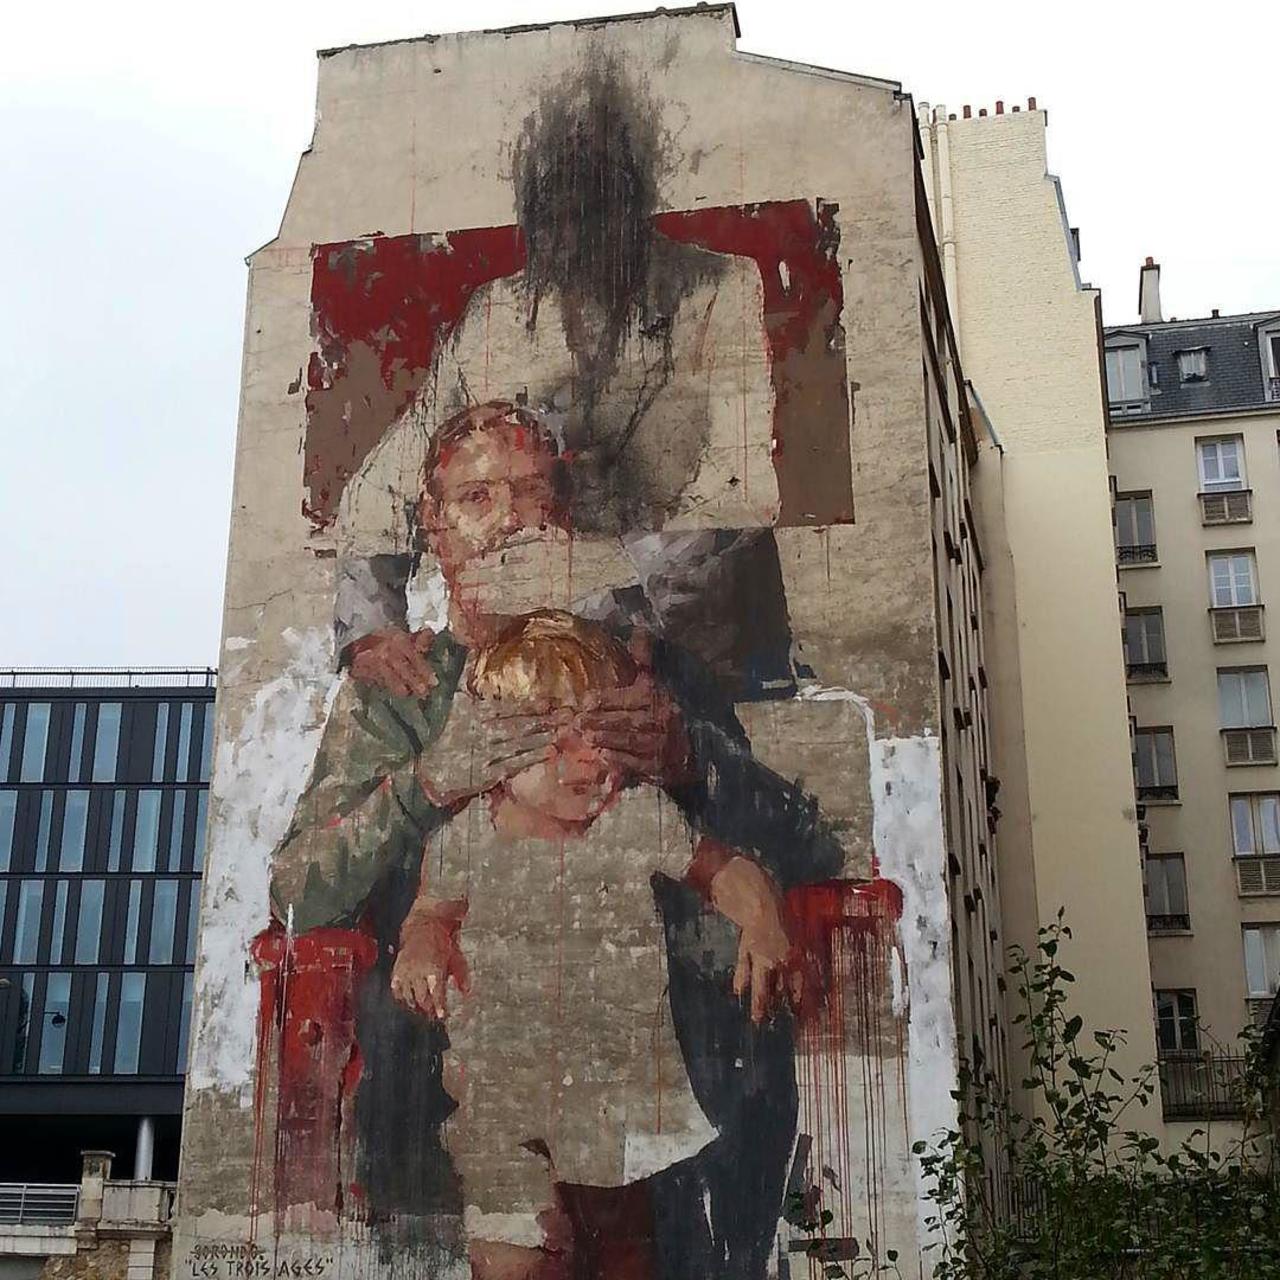 #Paris #graffiti photo by @fotoflaneuse http://ift.tt/1OwyYLG #StreetArt http://t.co/G4J7QC2psR